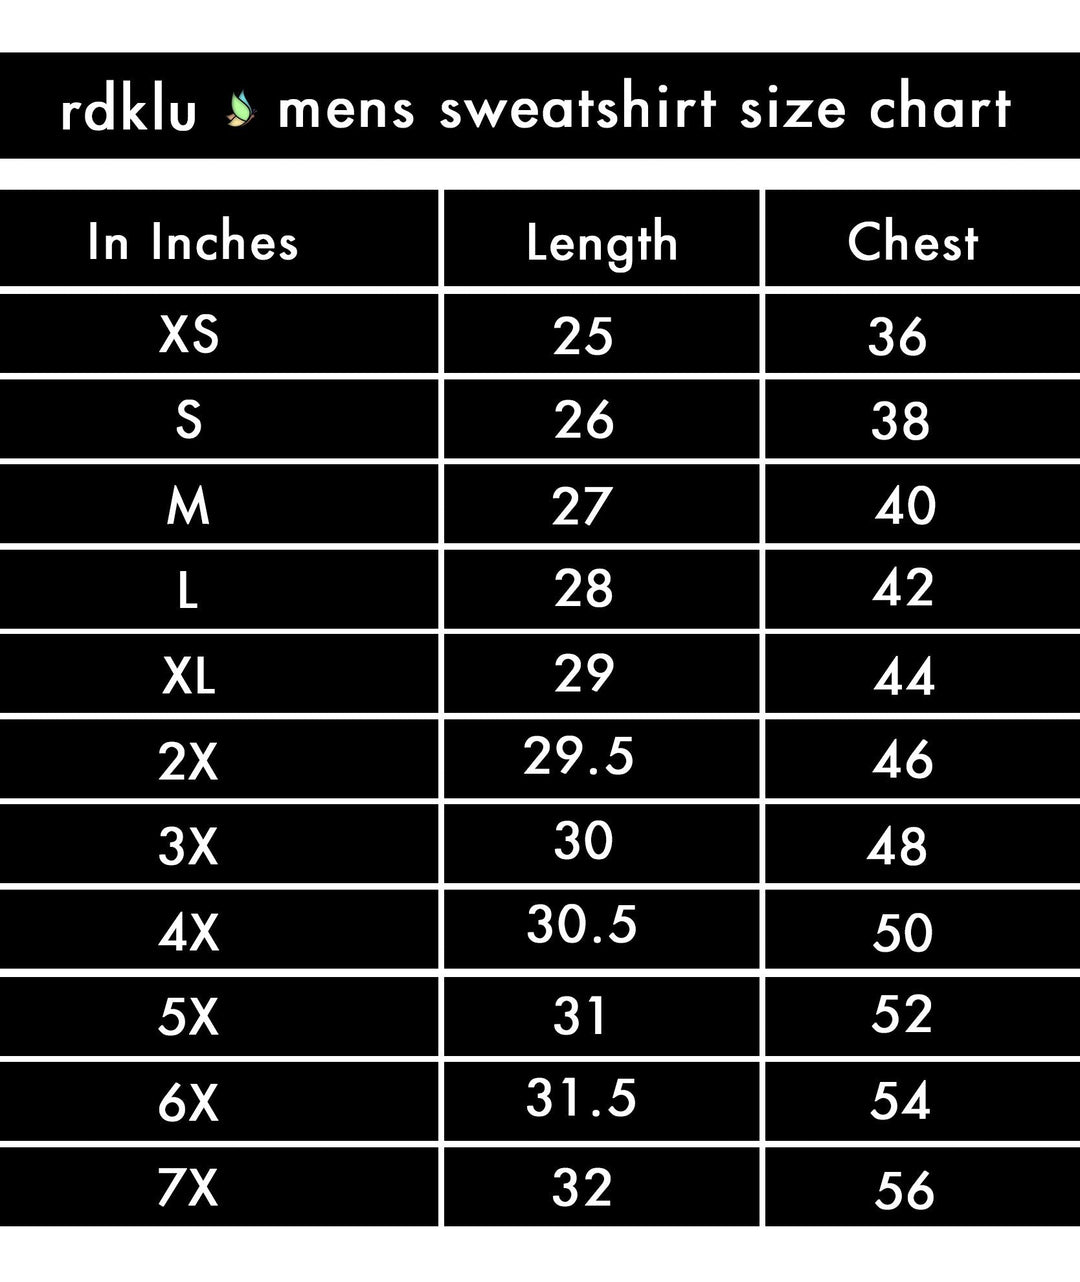 RDKLU MENS SWEATSHIRT - RDKL - Men's Sweatshirt#131